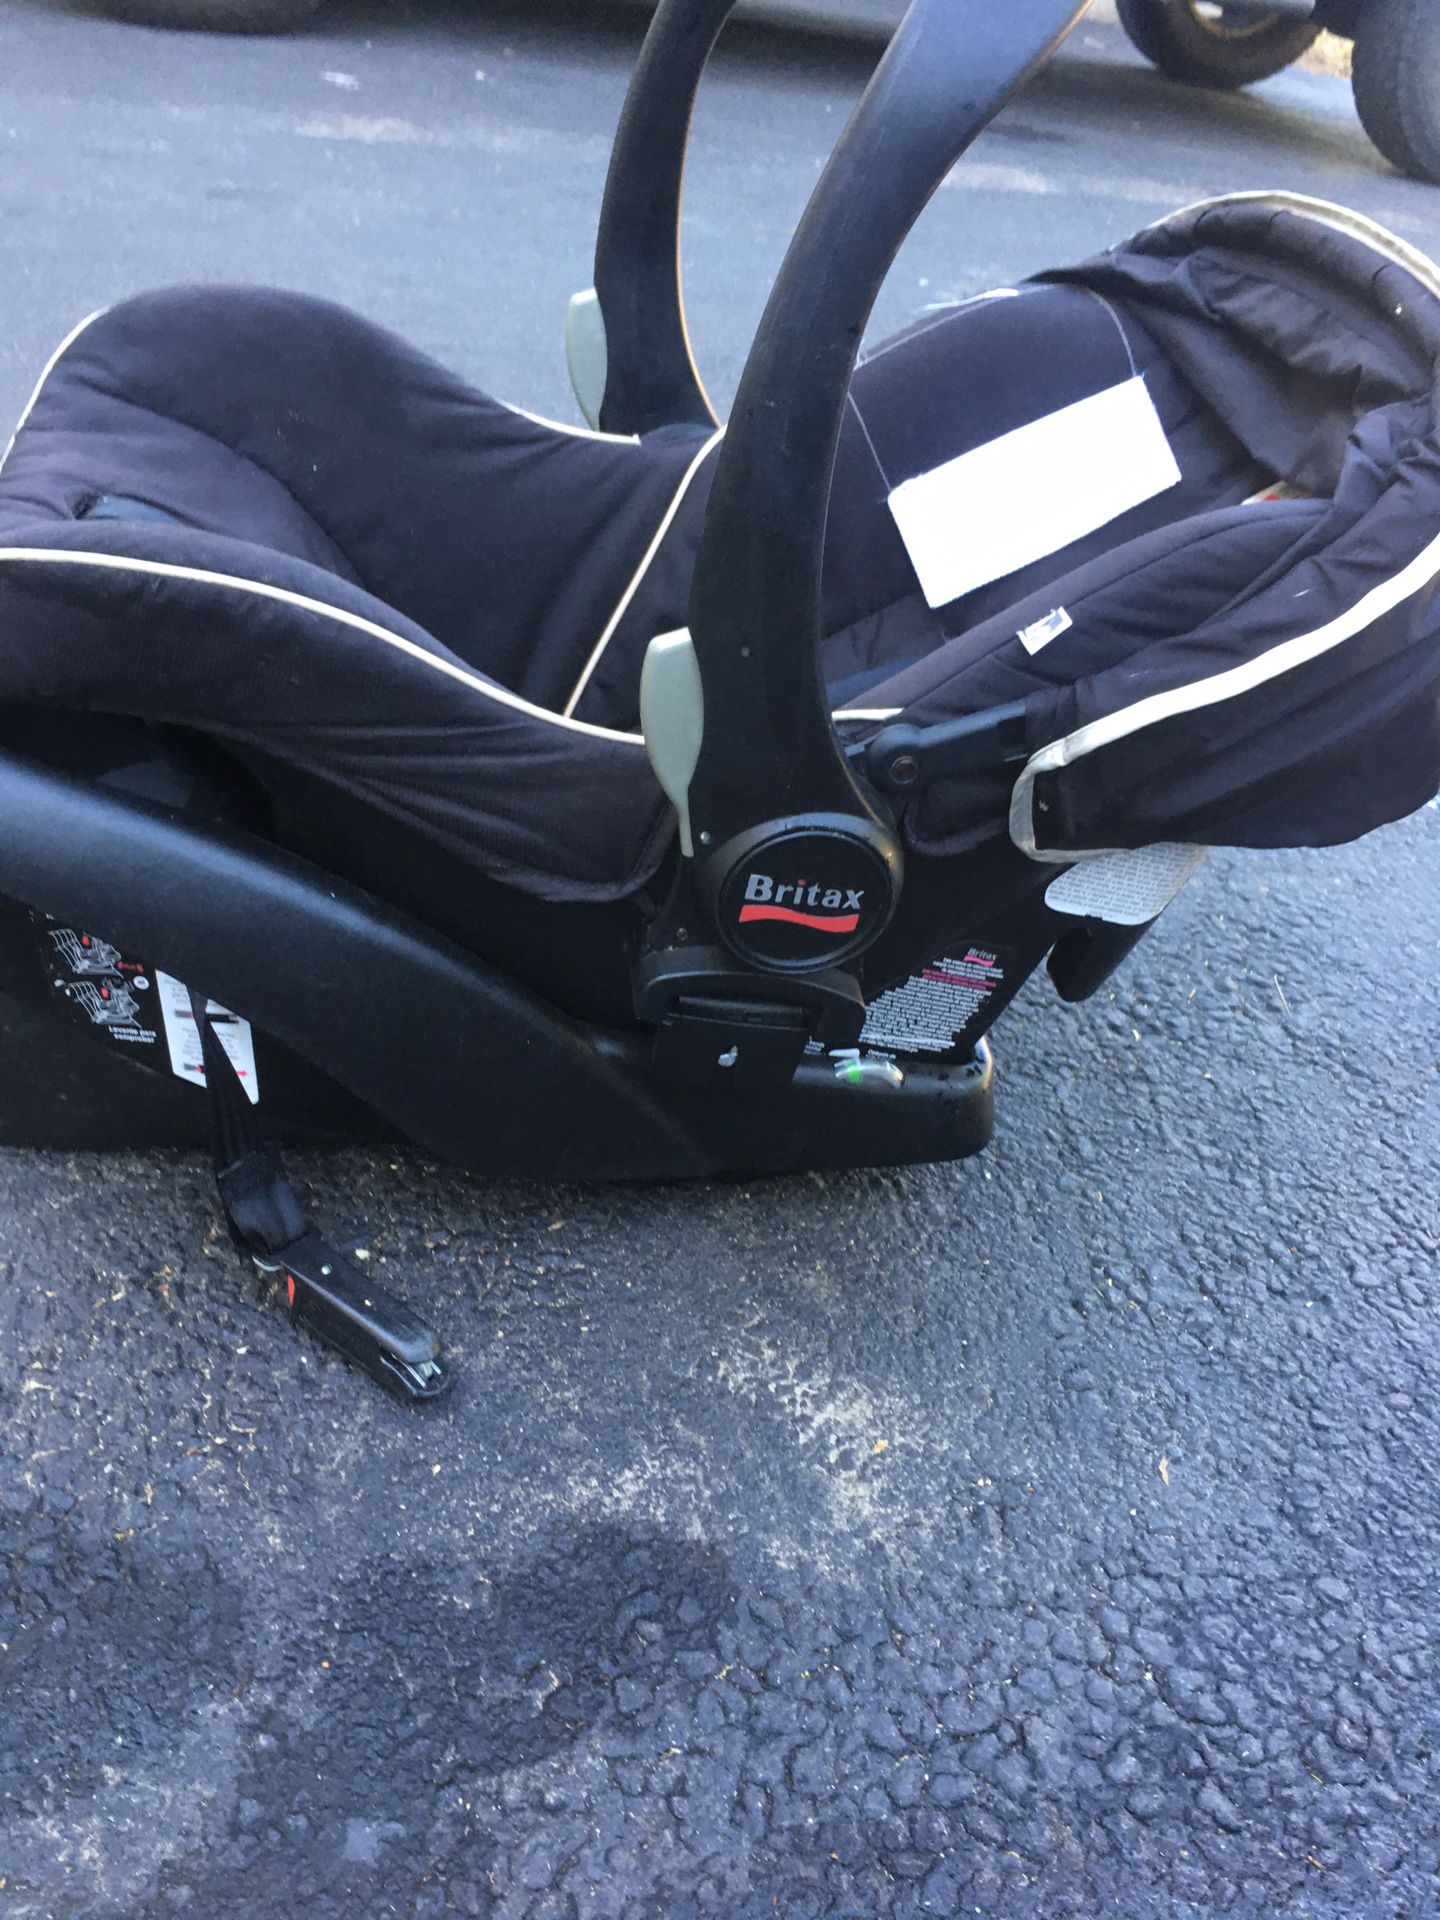 FREE—-Britax car seat with car base